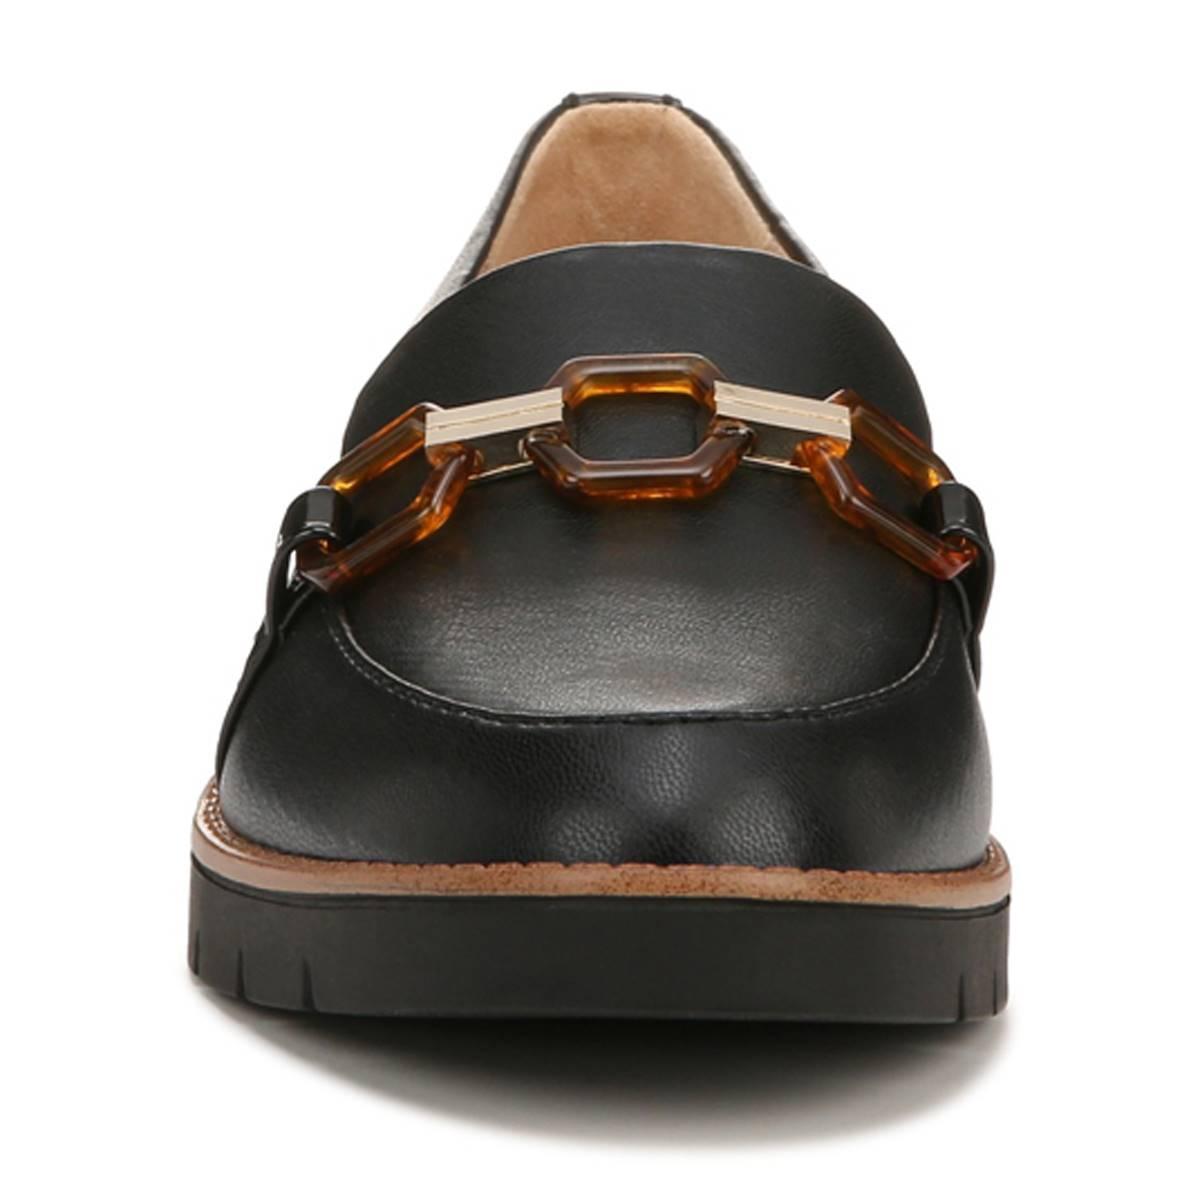 LifeStride Optimist Womens Loafers Black Product Image